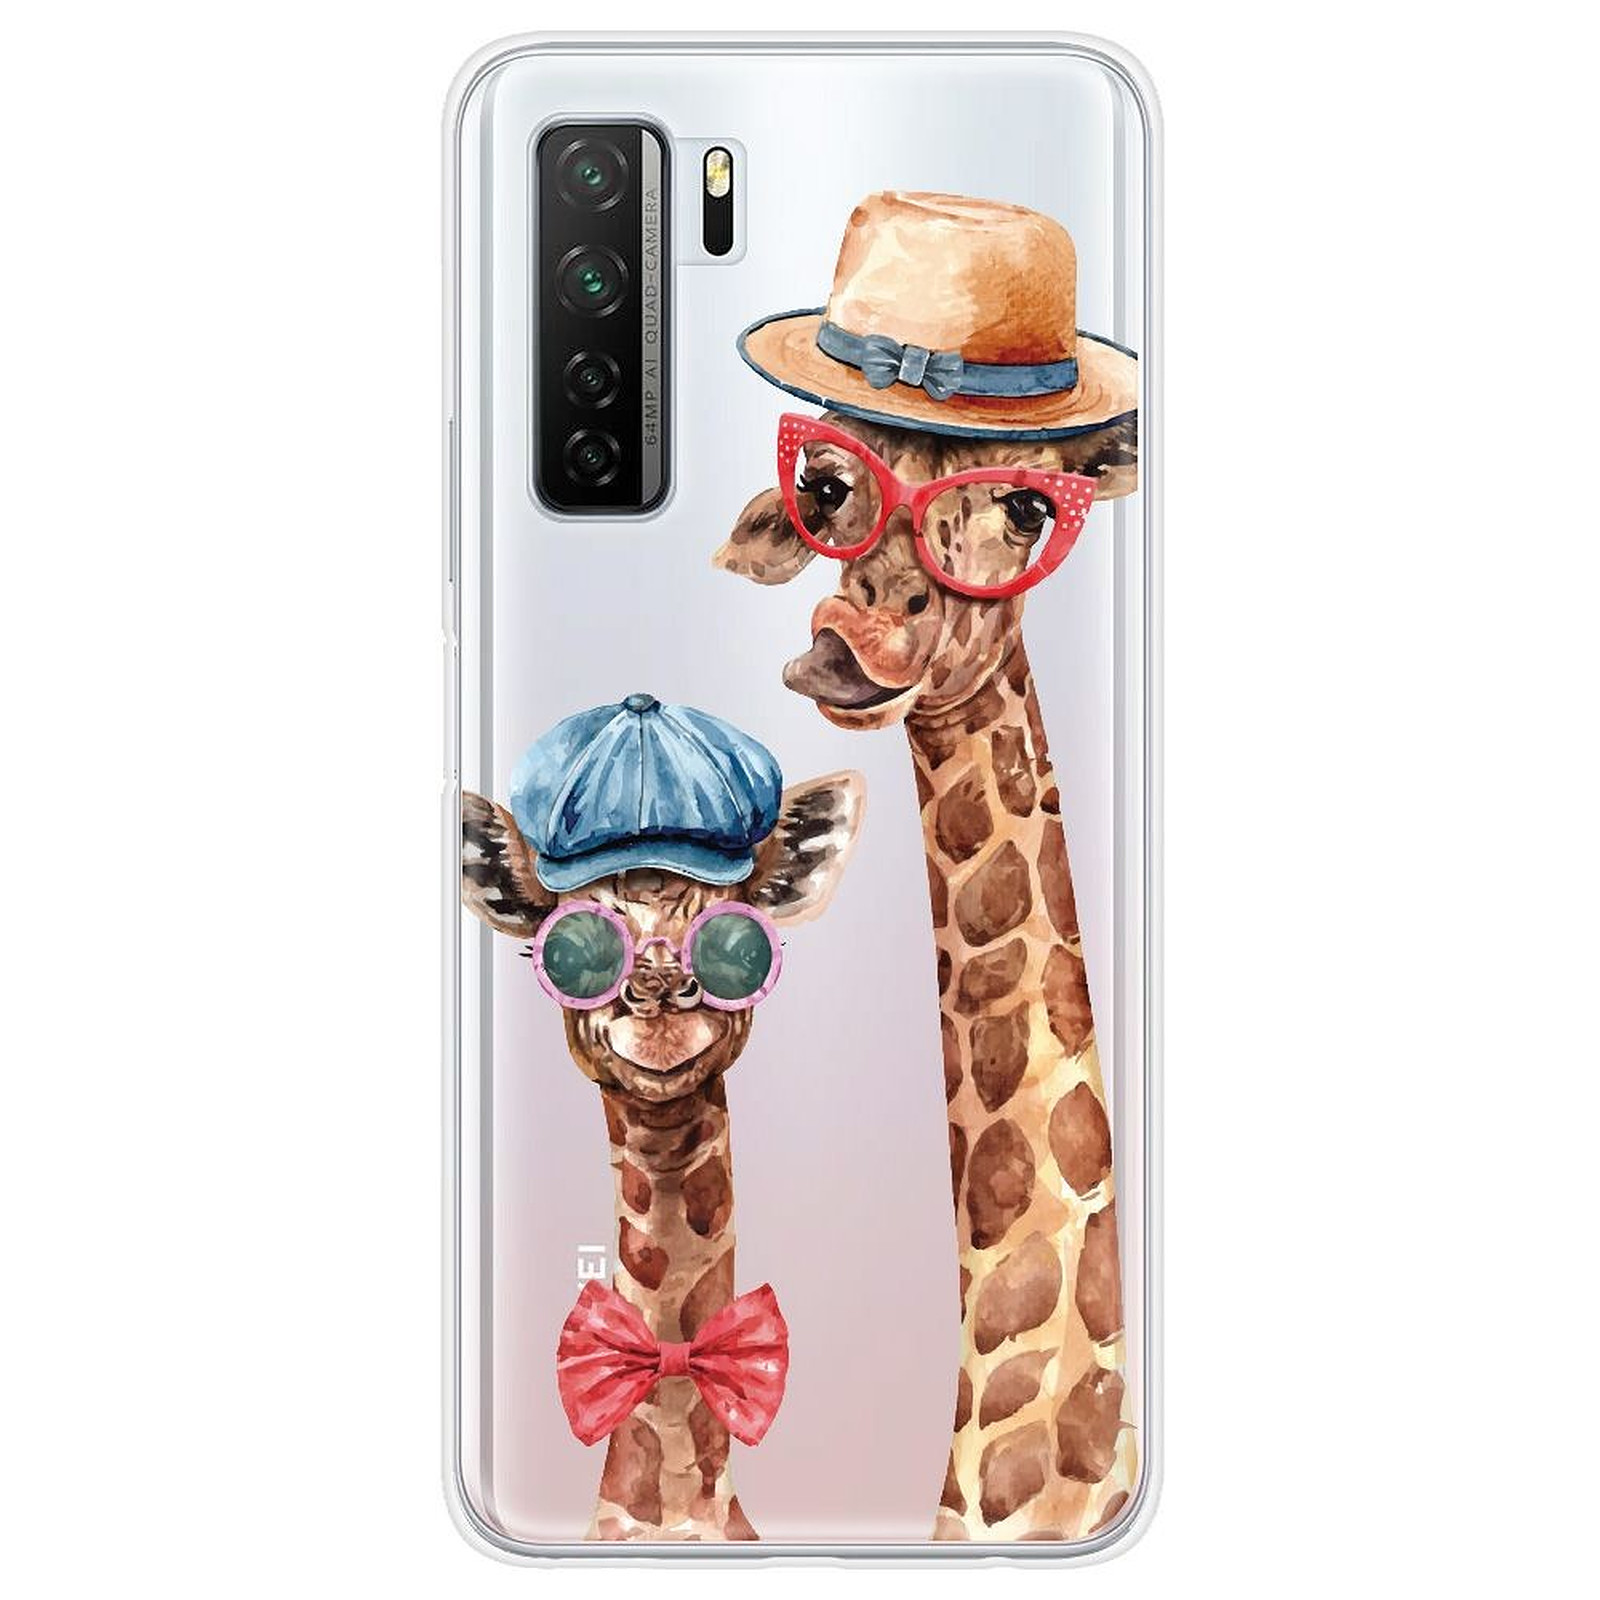 1001 Coques Coque silicone gel Huawei P40 Lite 5G motif Funny Girafe - Coque telephone 1001Coques